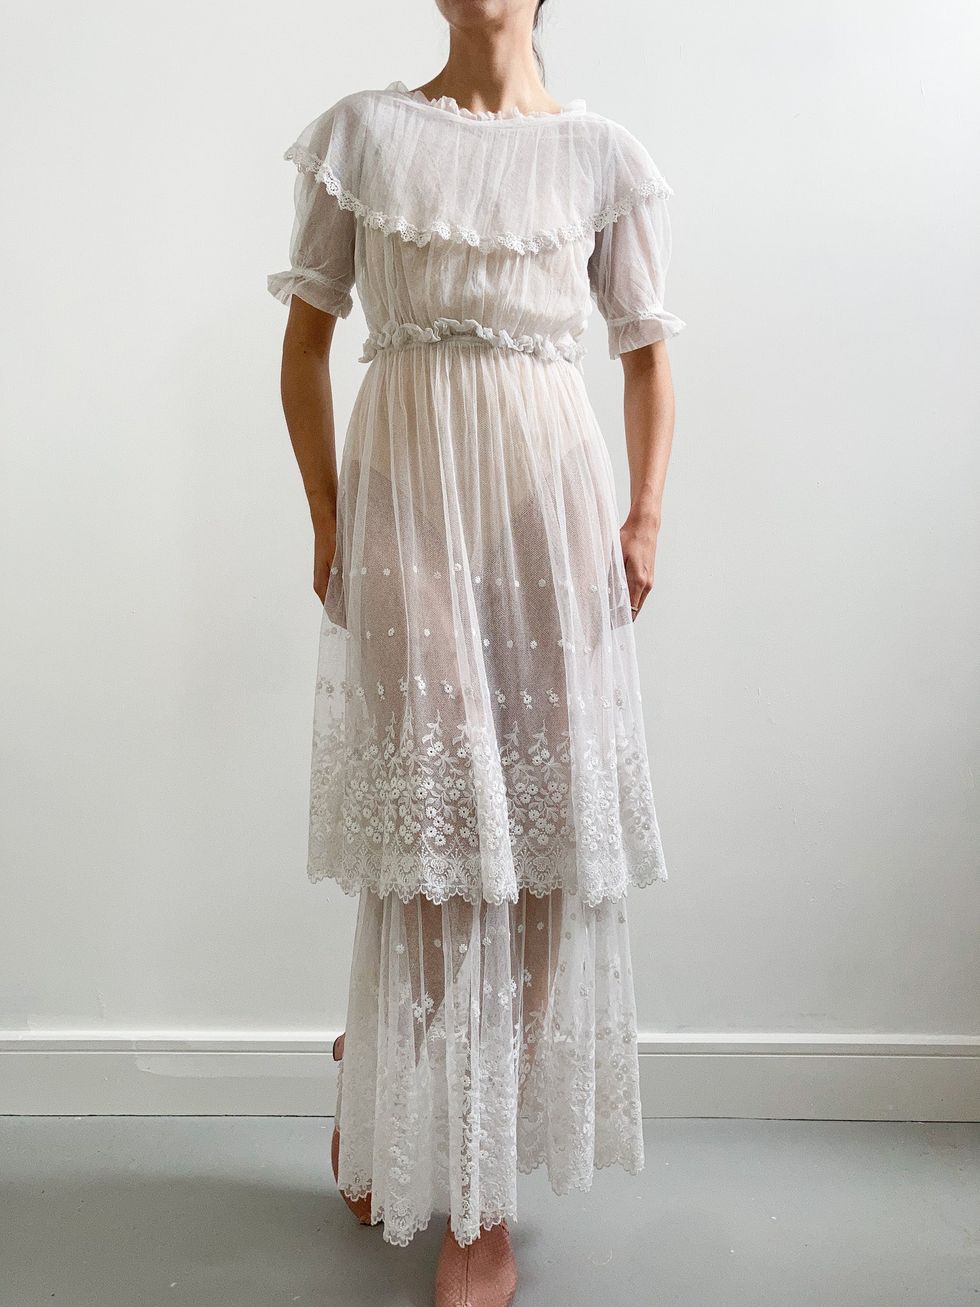 Antique Tiered Wedding Dress - Size 6